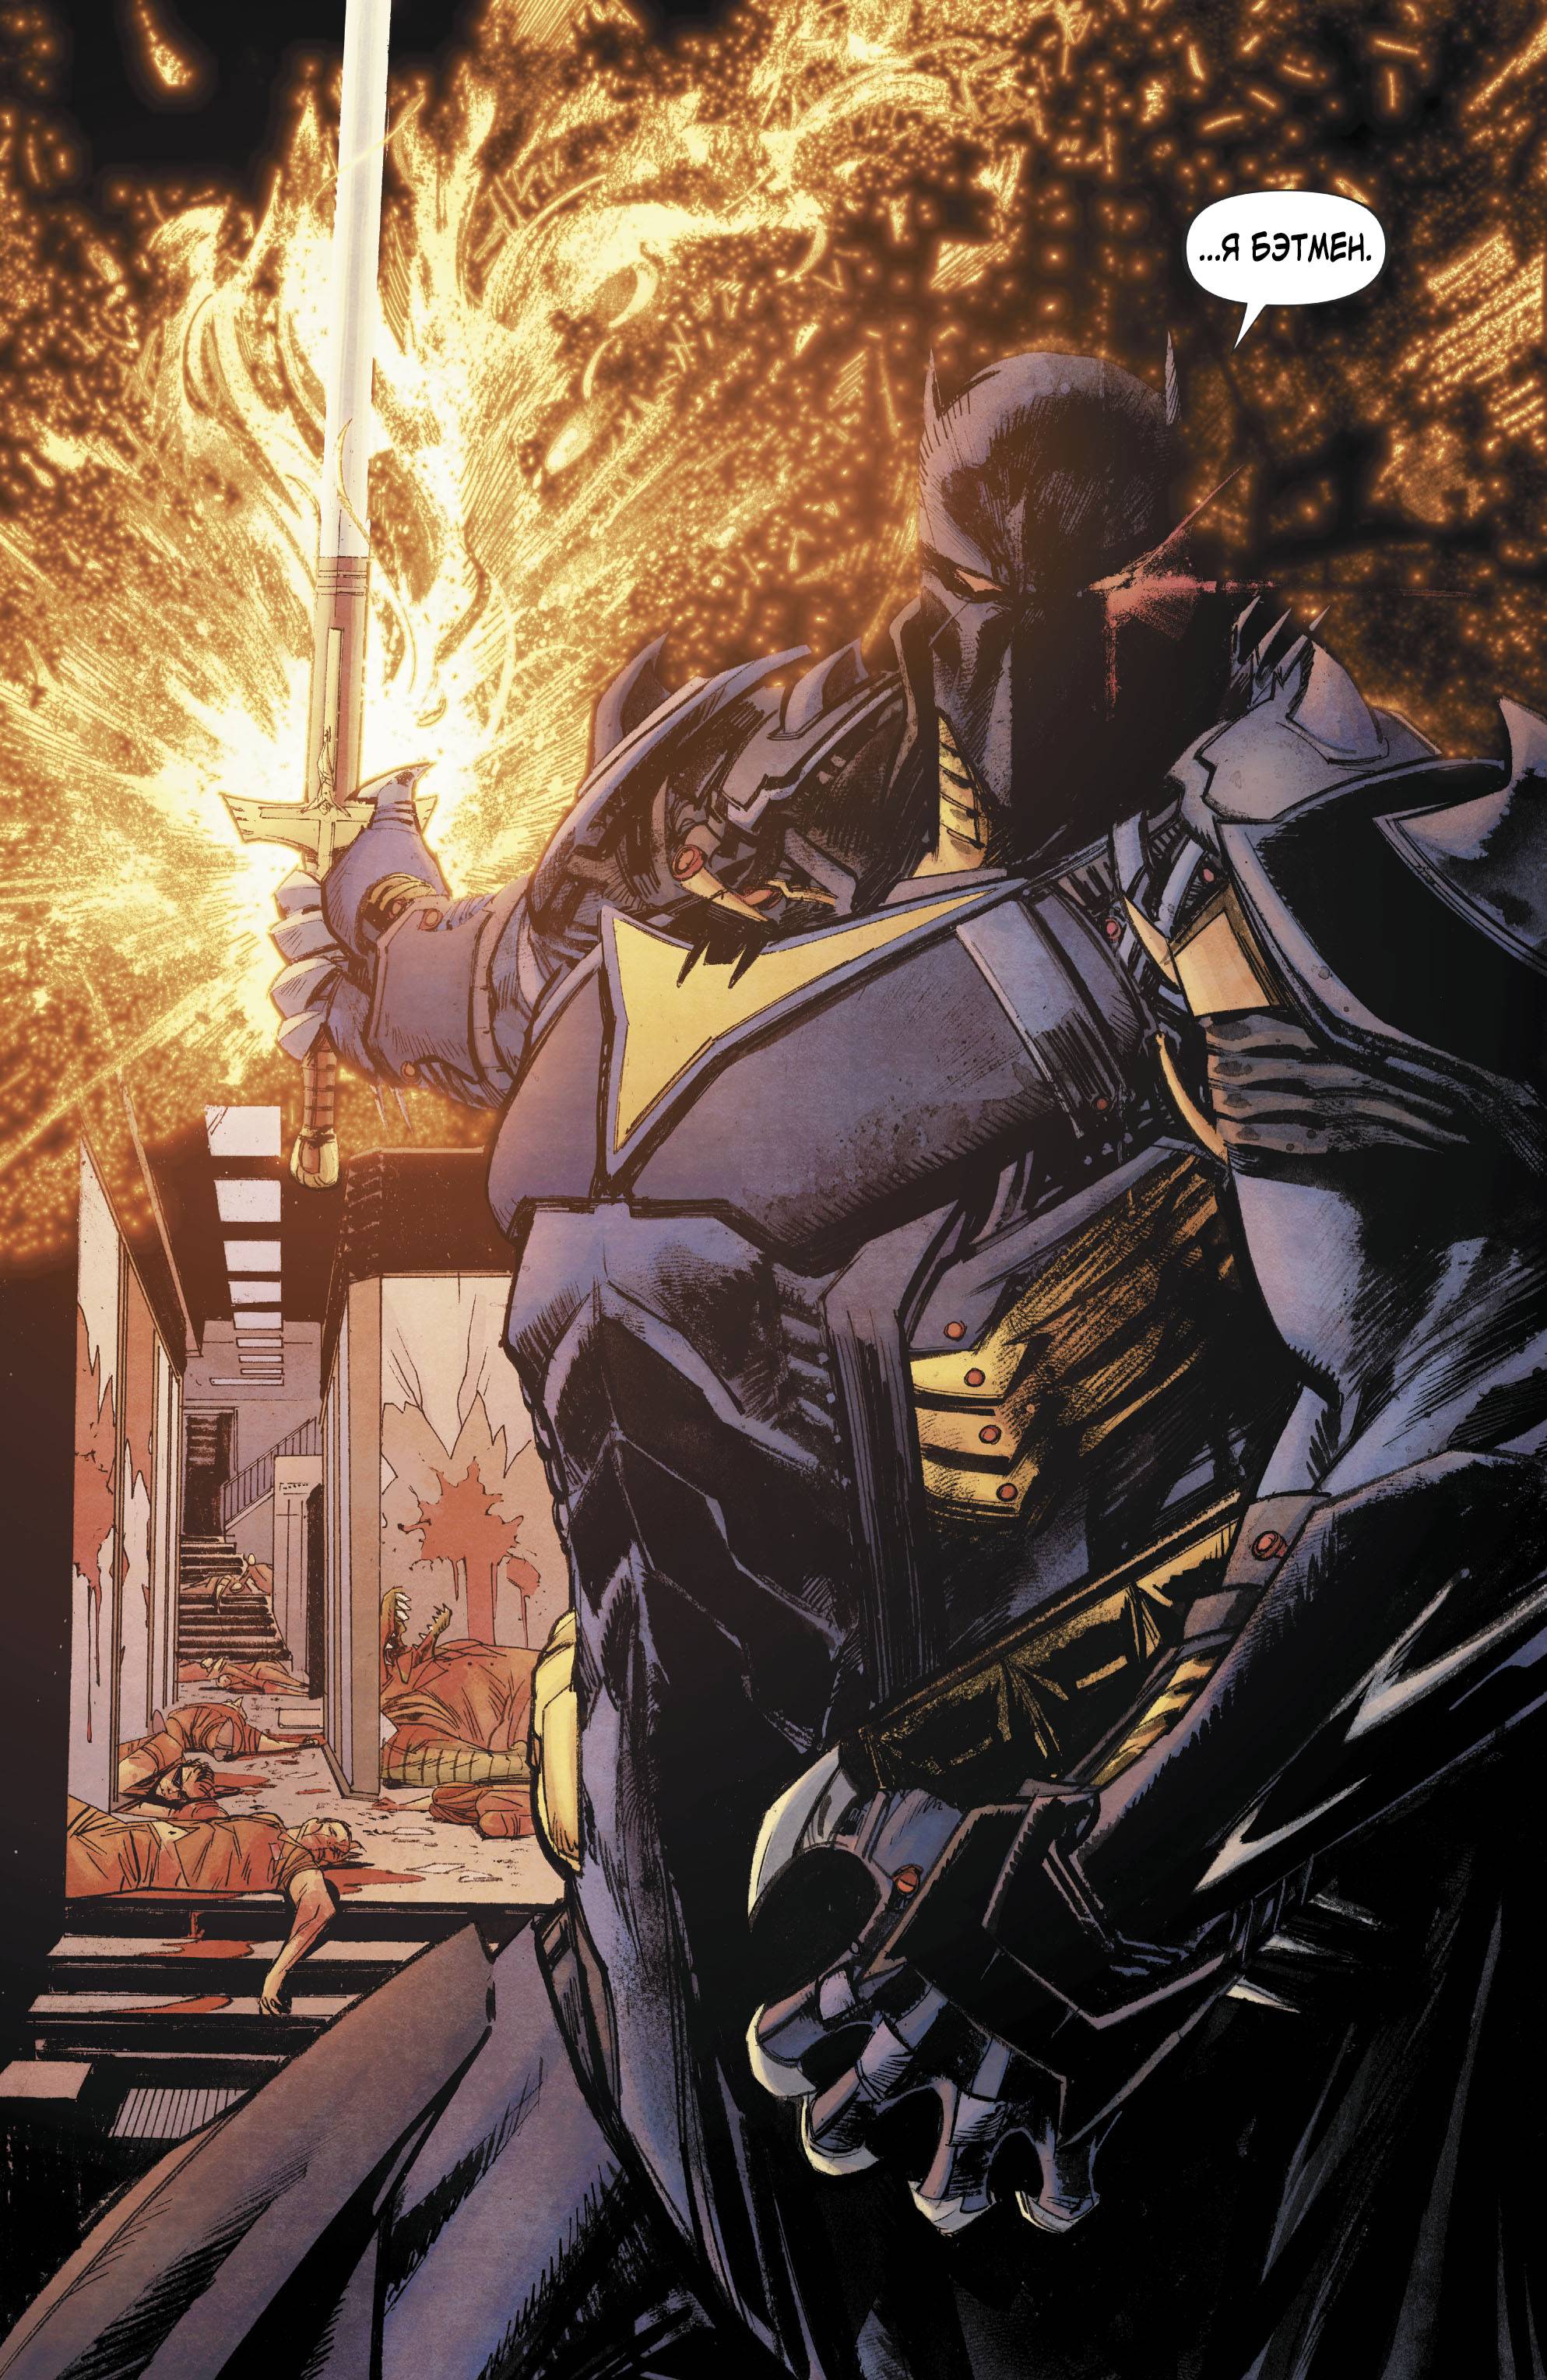 Бэтмен: Проклятие Белого Рыцаря №5 онлайн